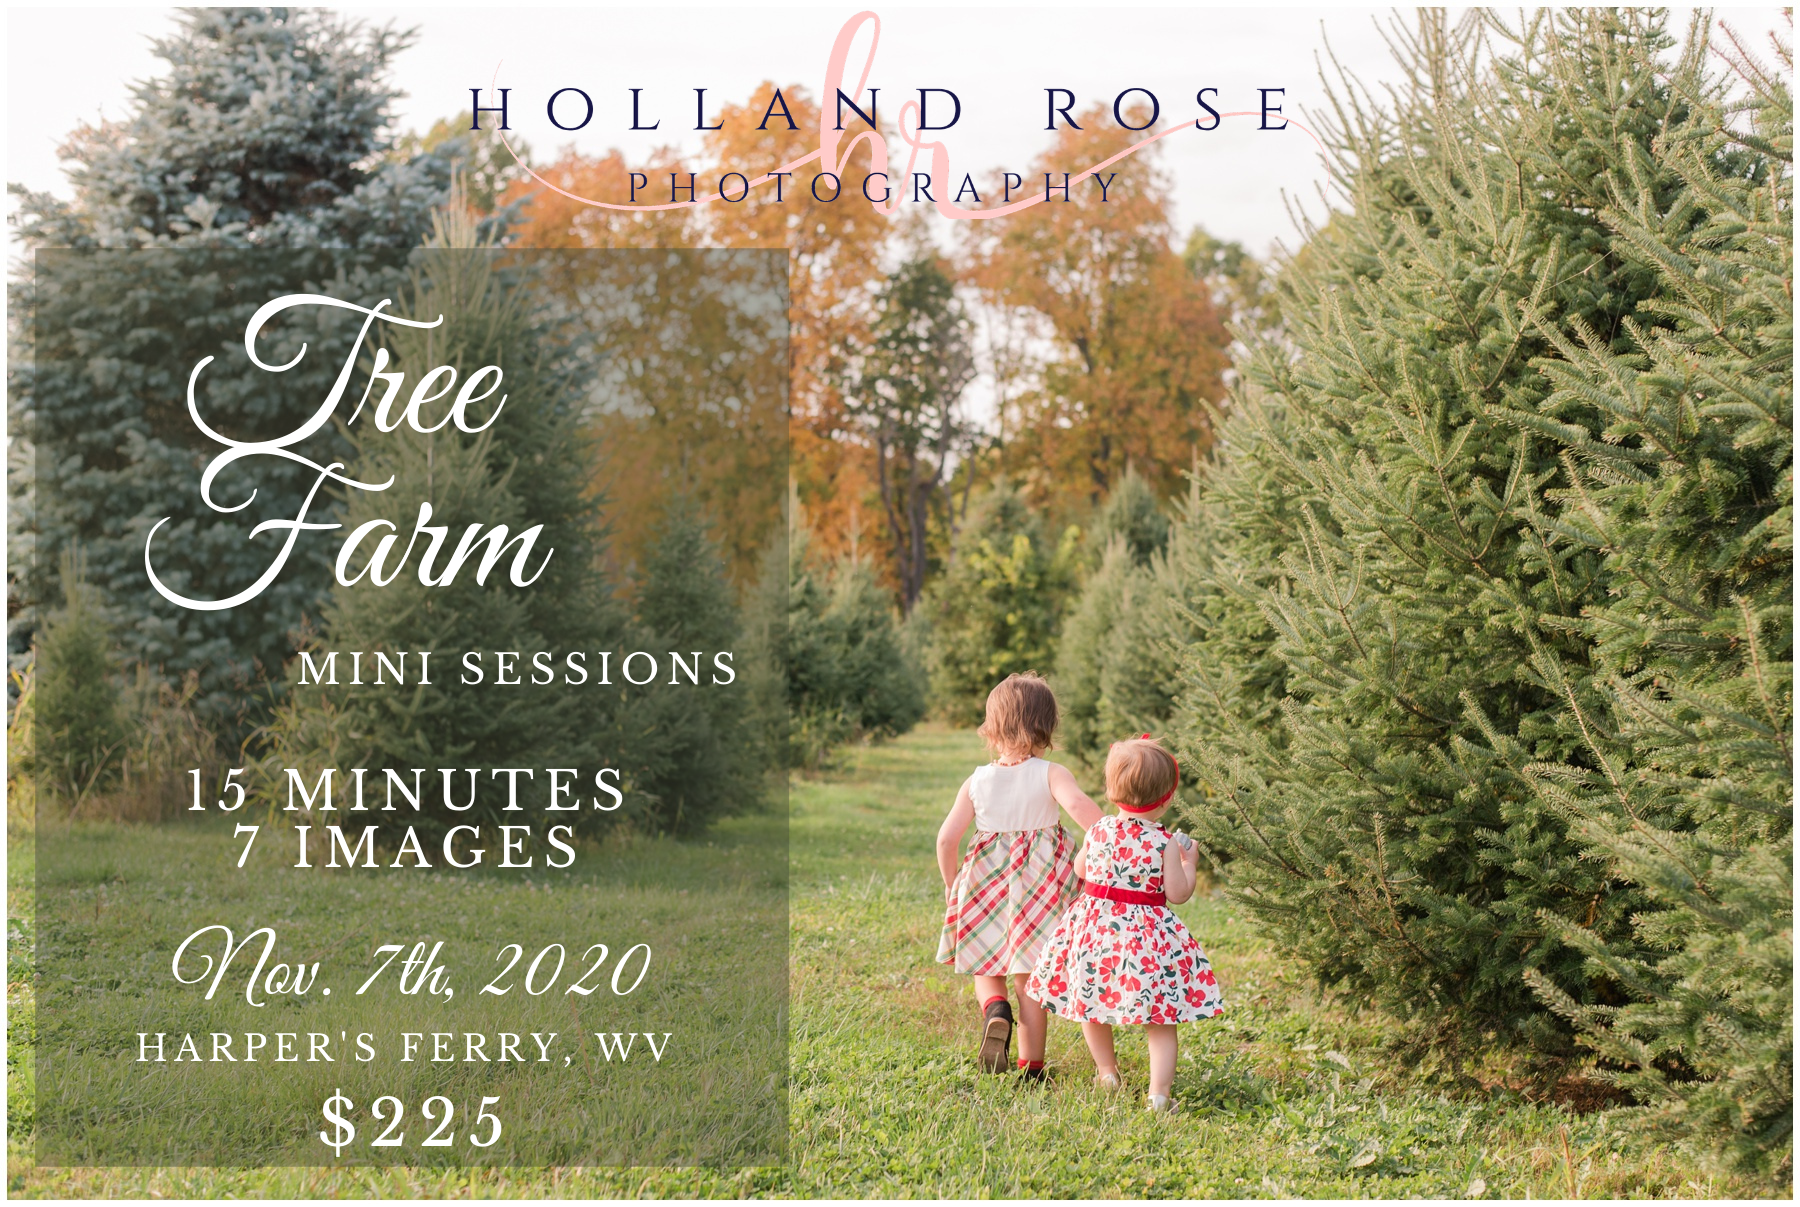 Tree Farm Mini Sessions